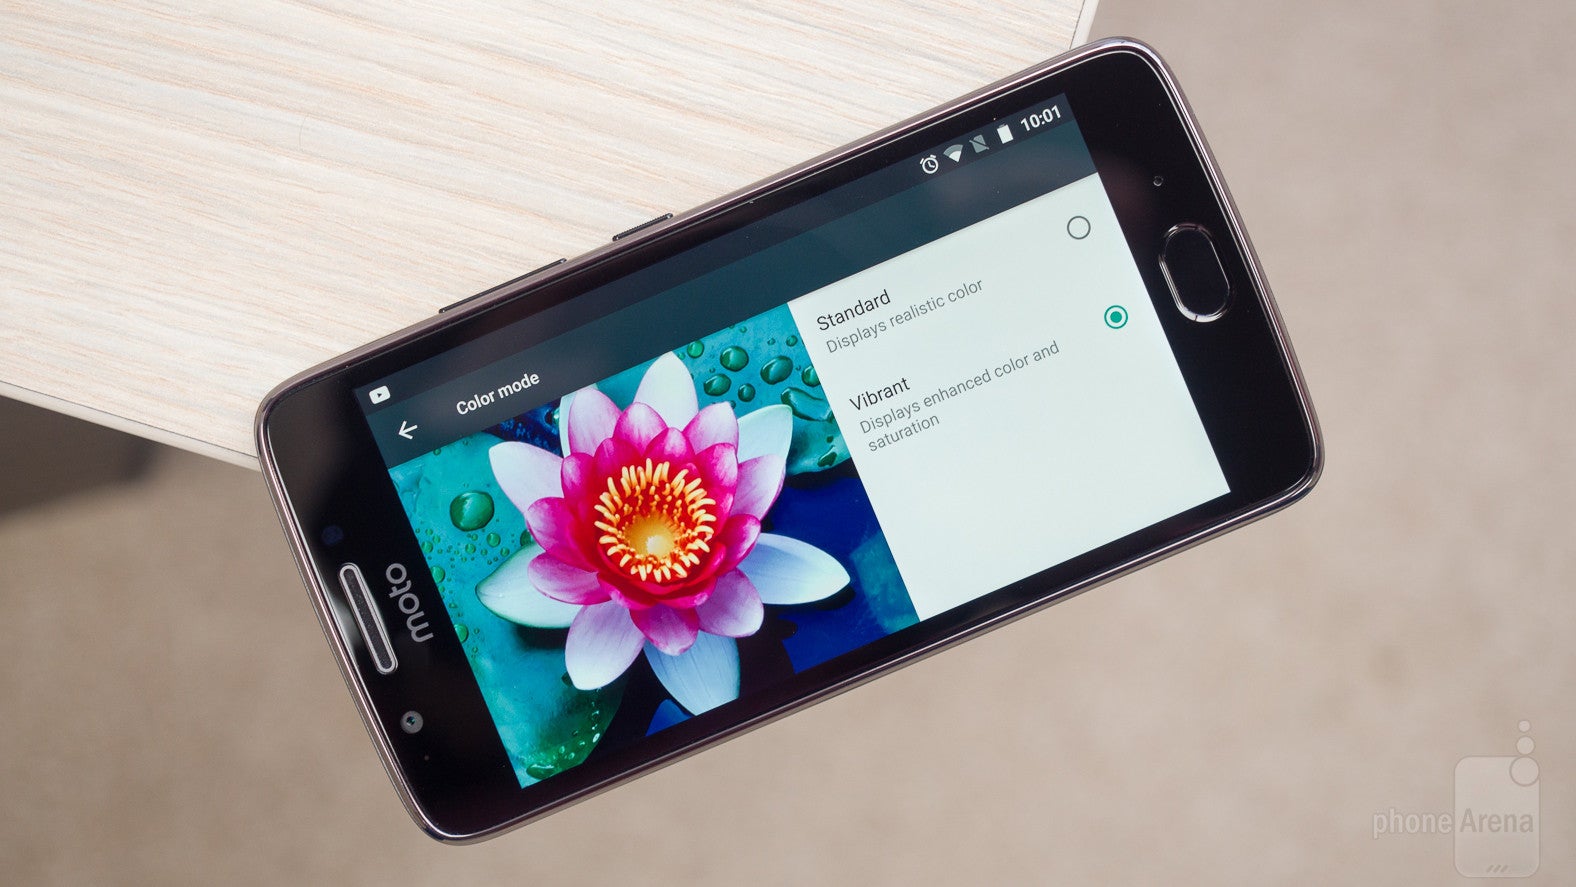 Motorola Moto G5 Review